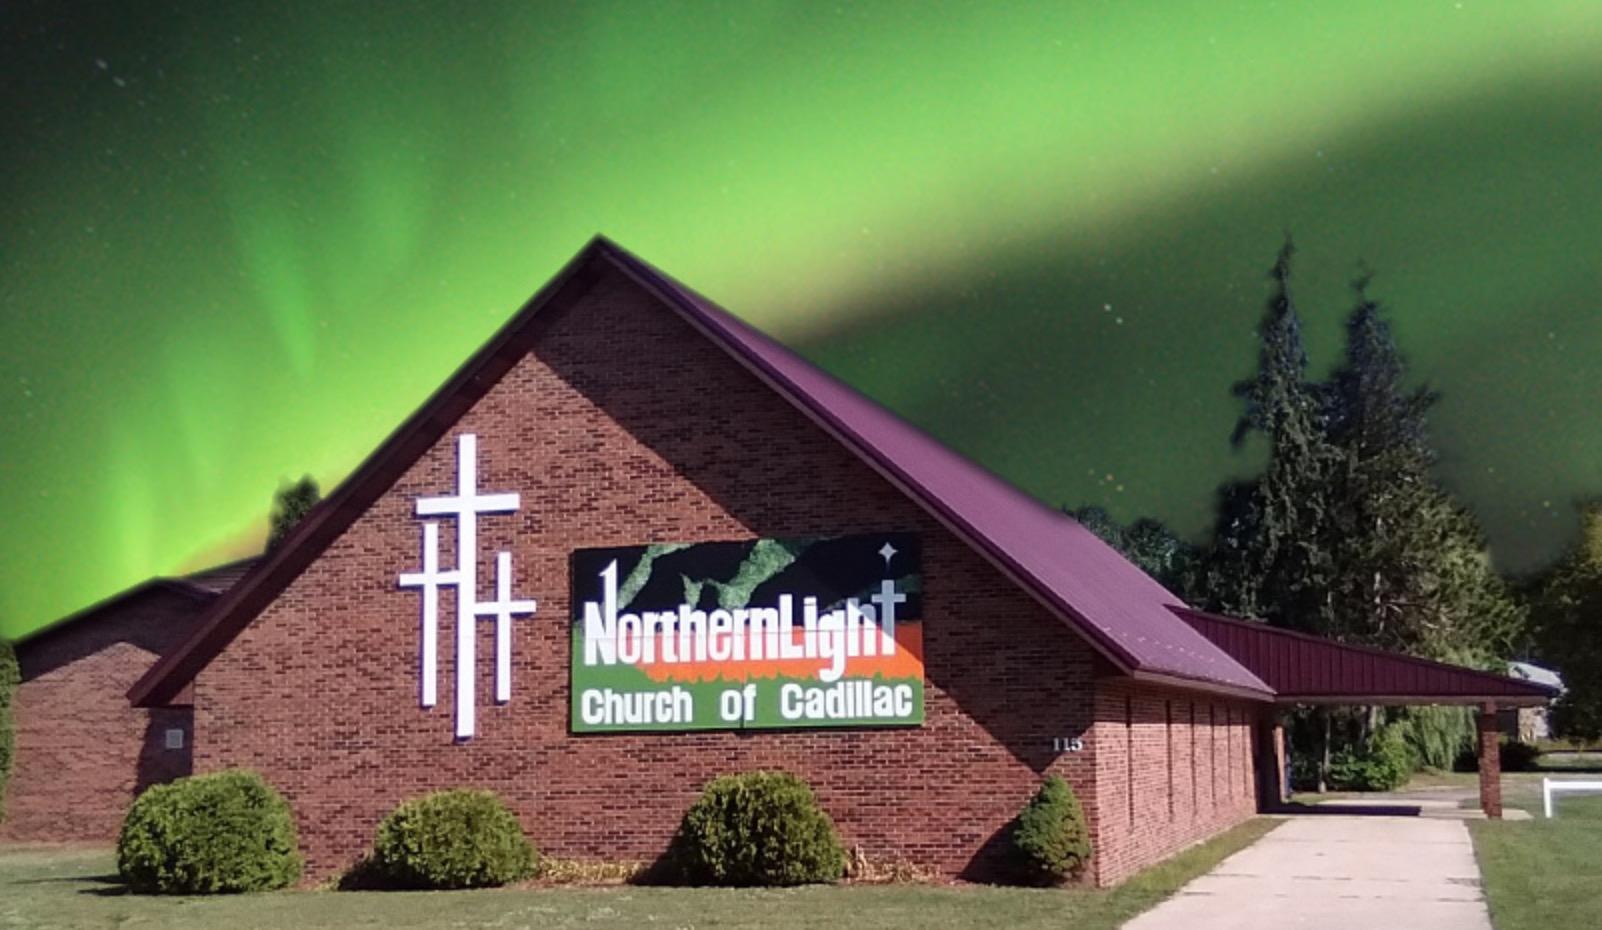 NorthernLight Church